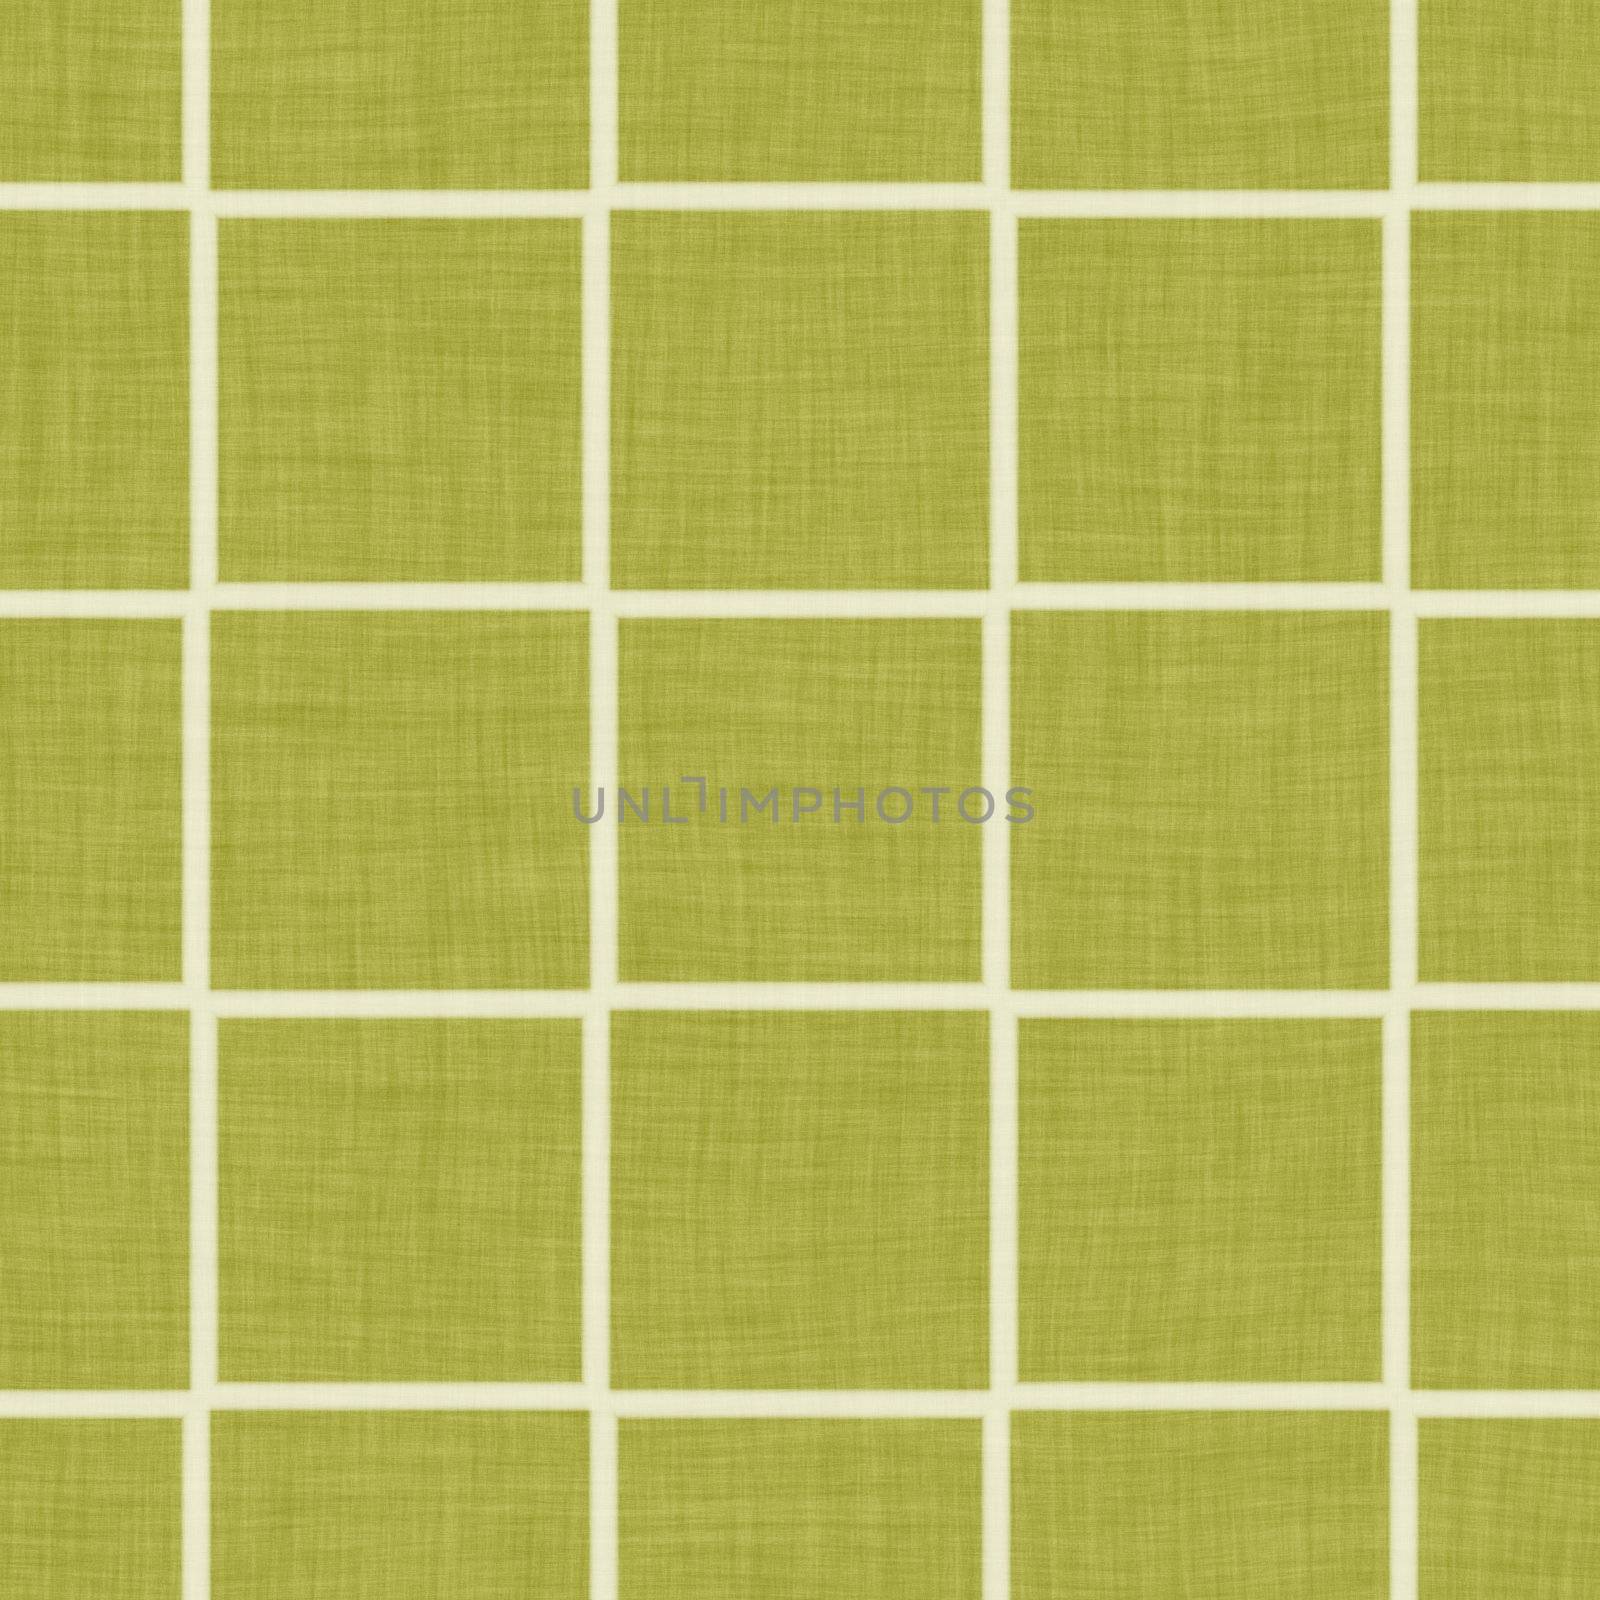 Seamless Linen Cloth Texture as a background